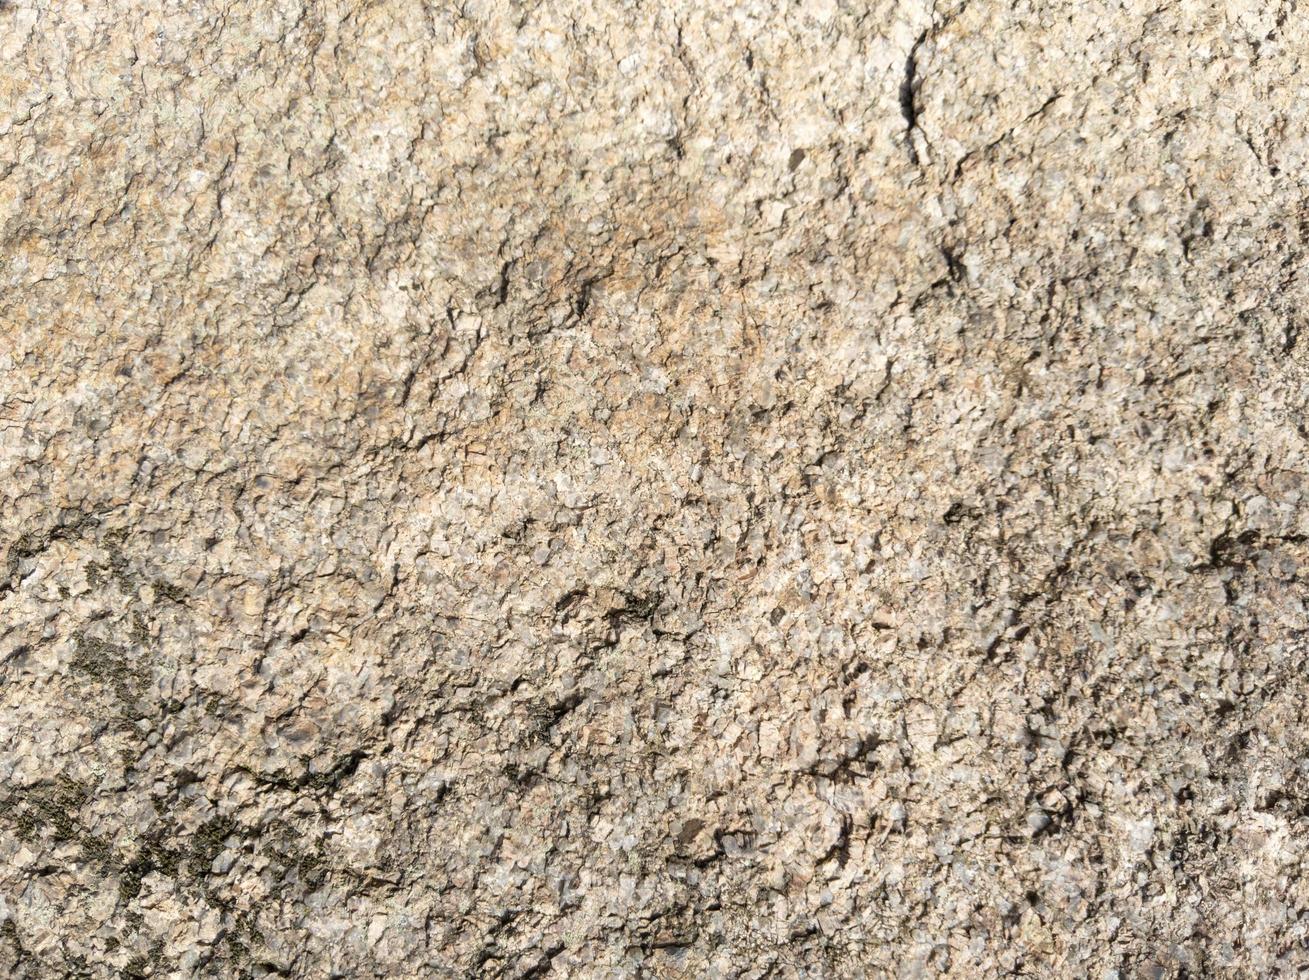 textura e fundo de rochas. fotografia da natureza. foto